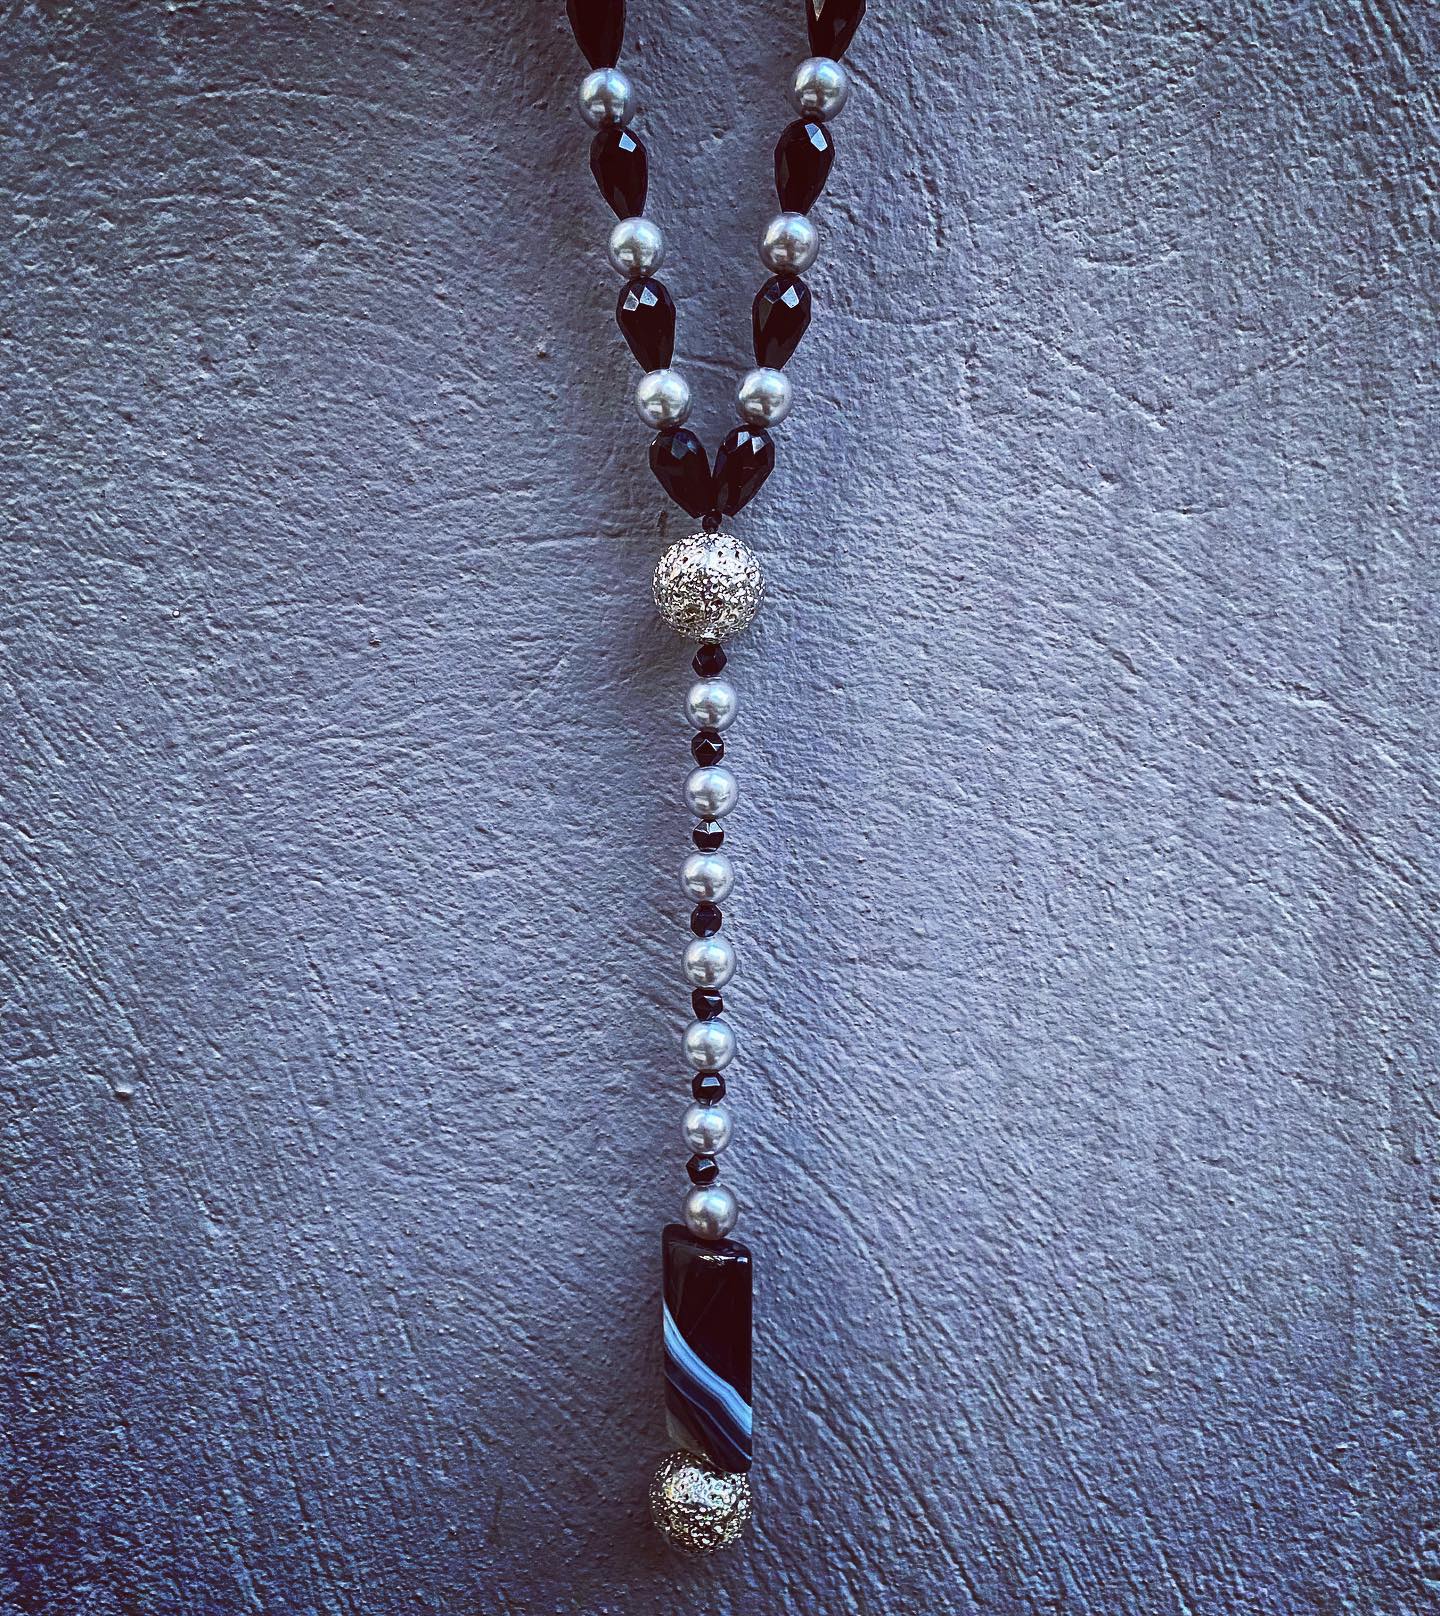 FWcollection2022/23#mariatsaousi_com #mariatsaousi.com#collection#necklace by mariatsaousi.com#stayhome #staysafe #summervibes #summercollection #newcollection #necklaces #handmadejewelry #earrings#semiprecious stones#mariatsaousi_com#